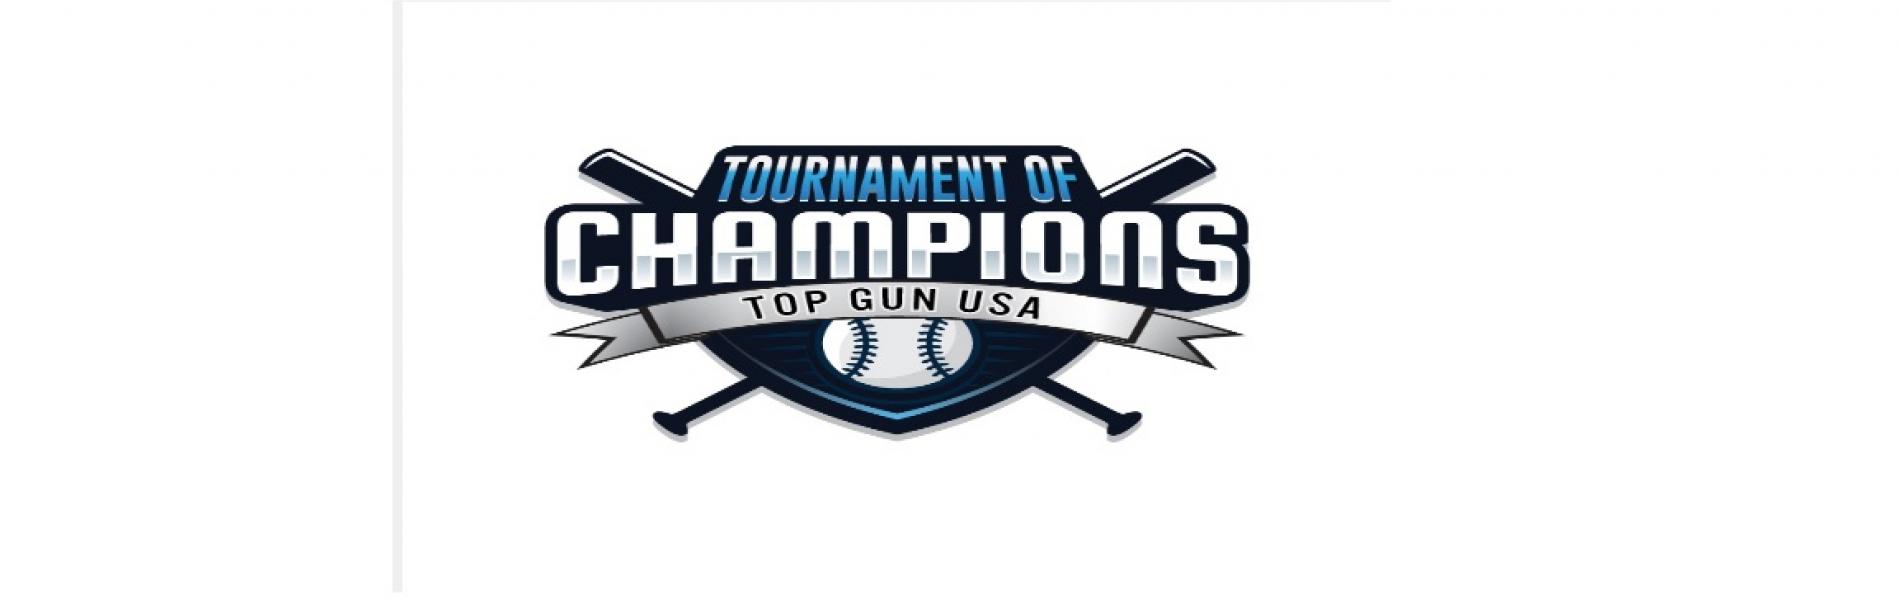 Top Gun Tournament of Champions